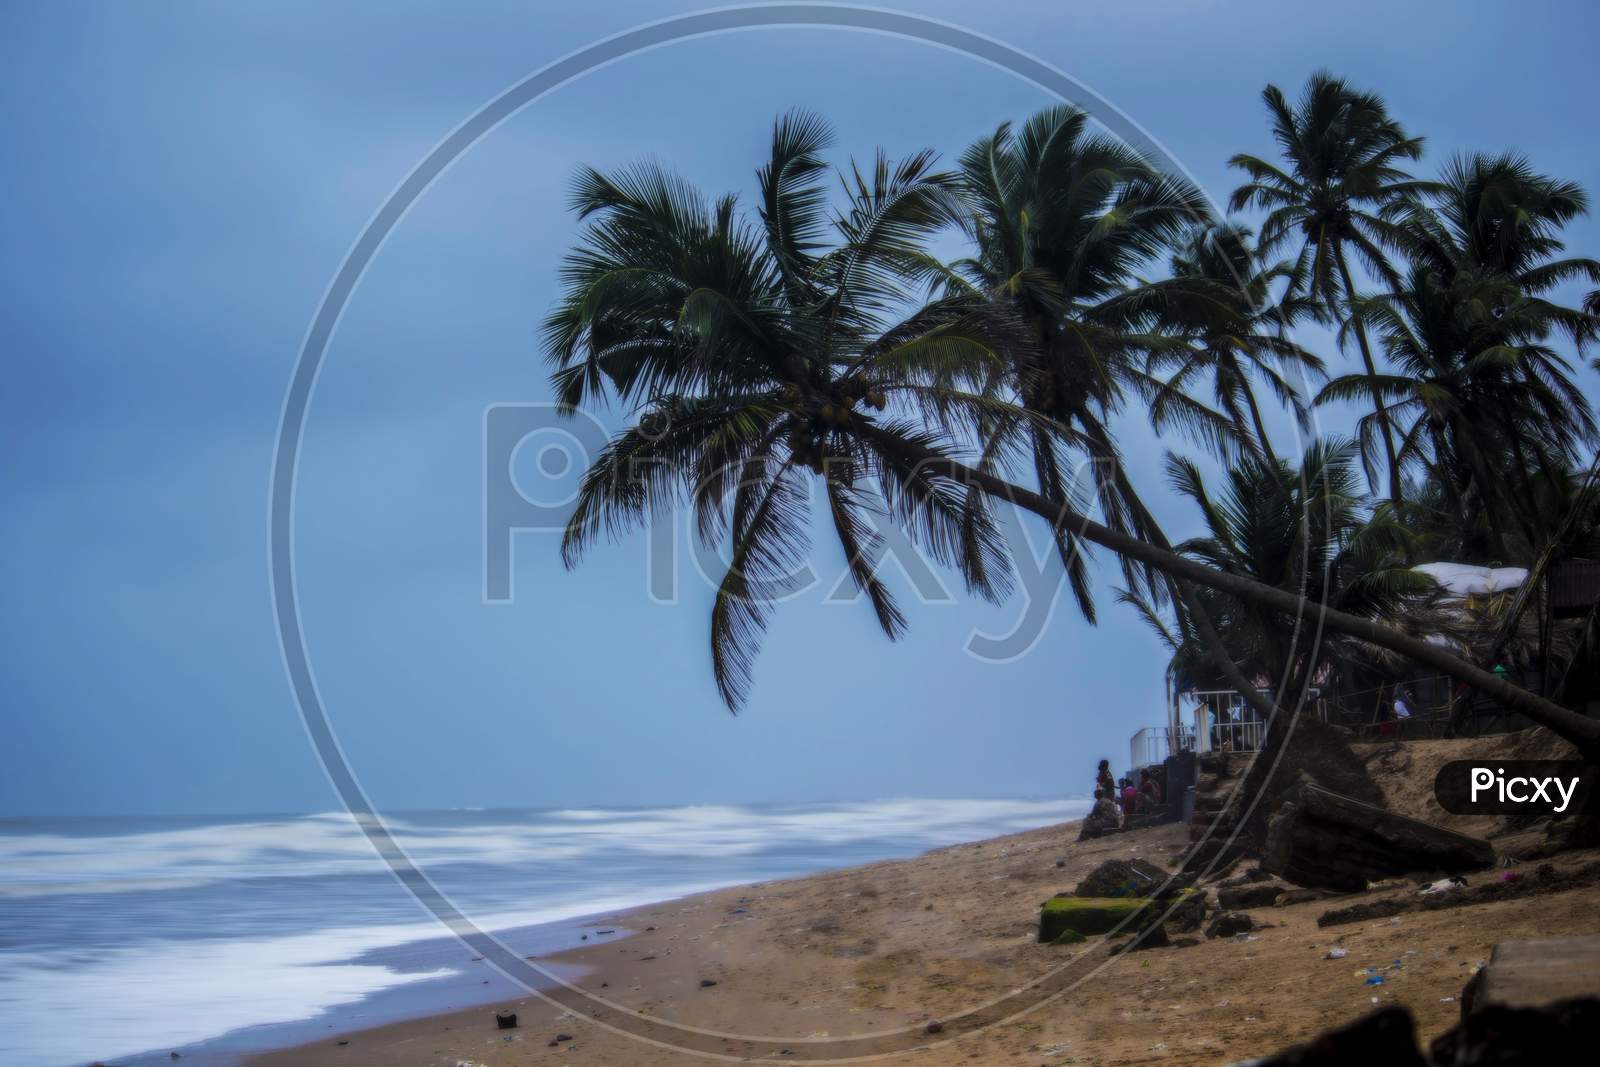 picturesque beach in Goa